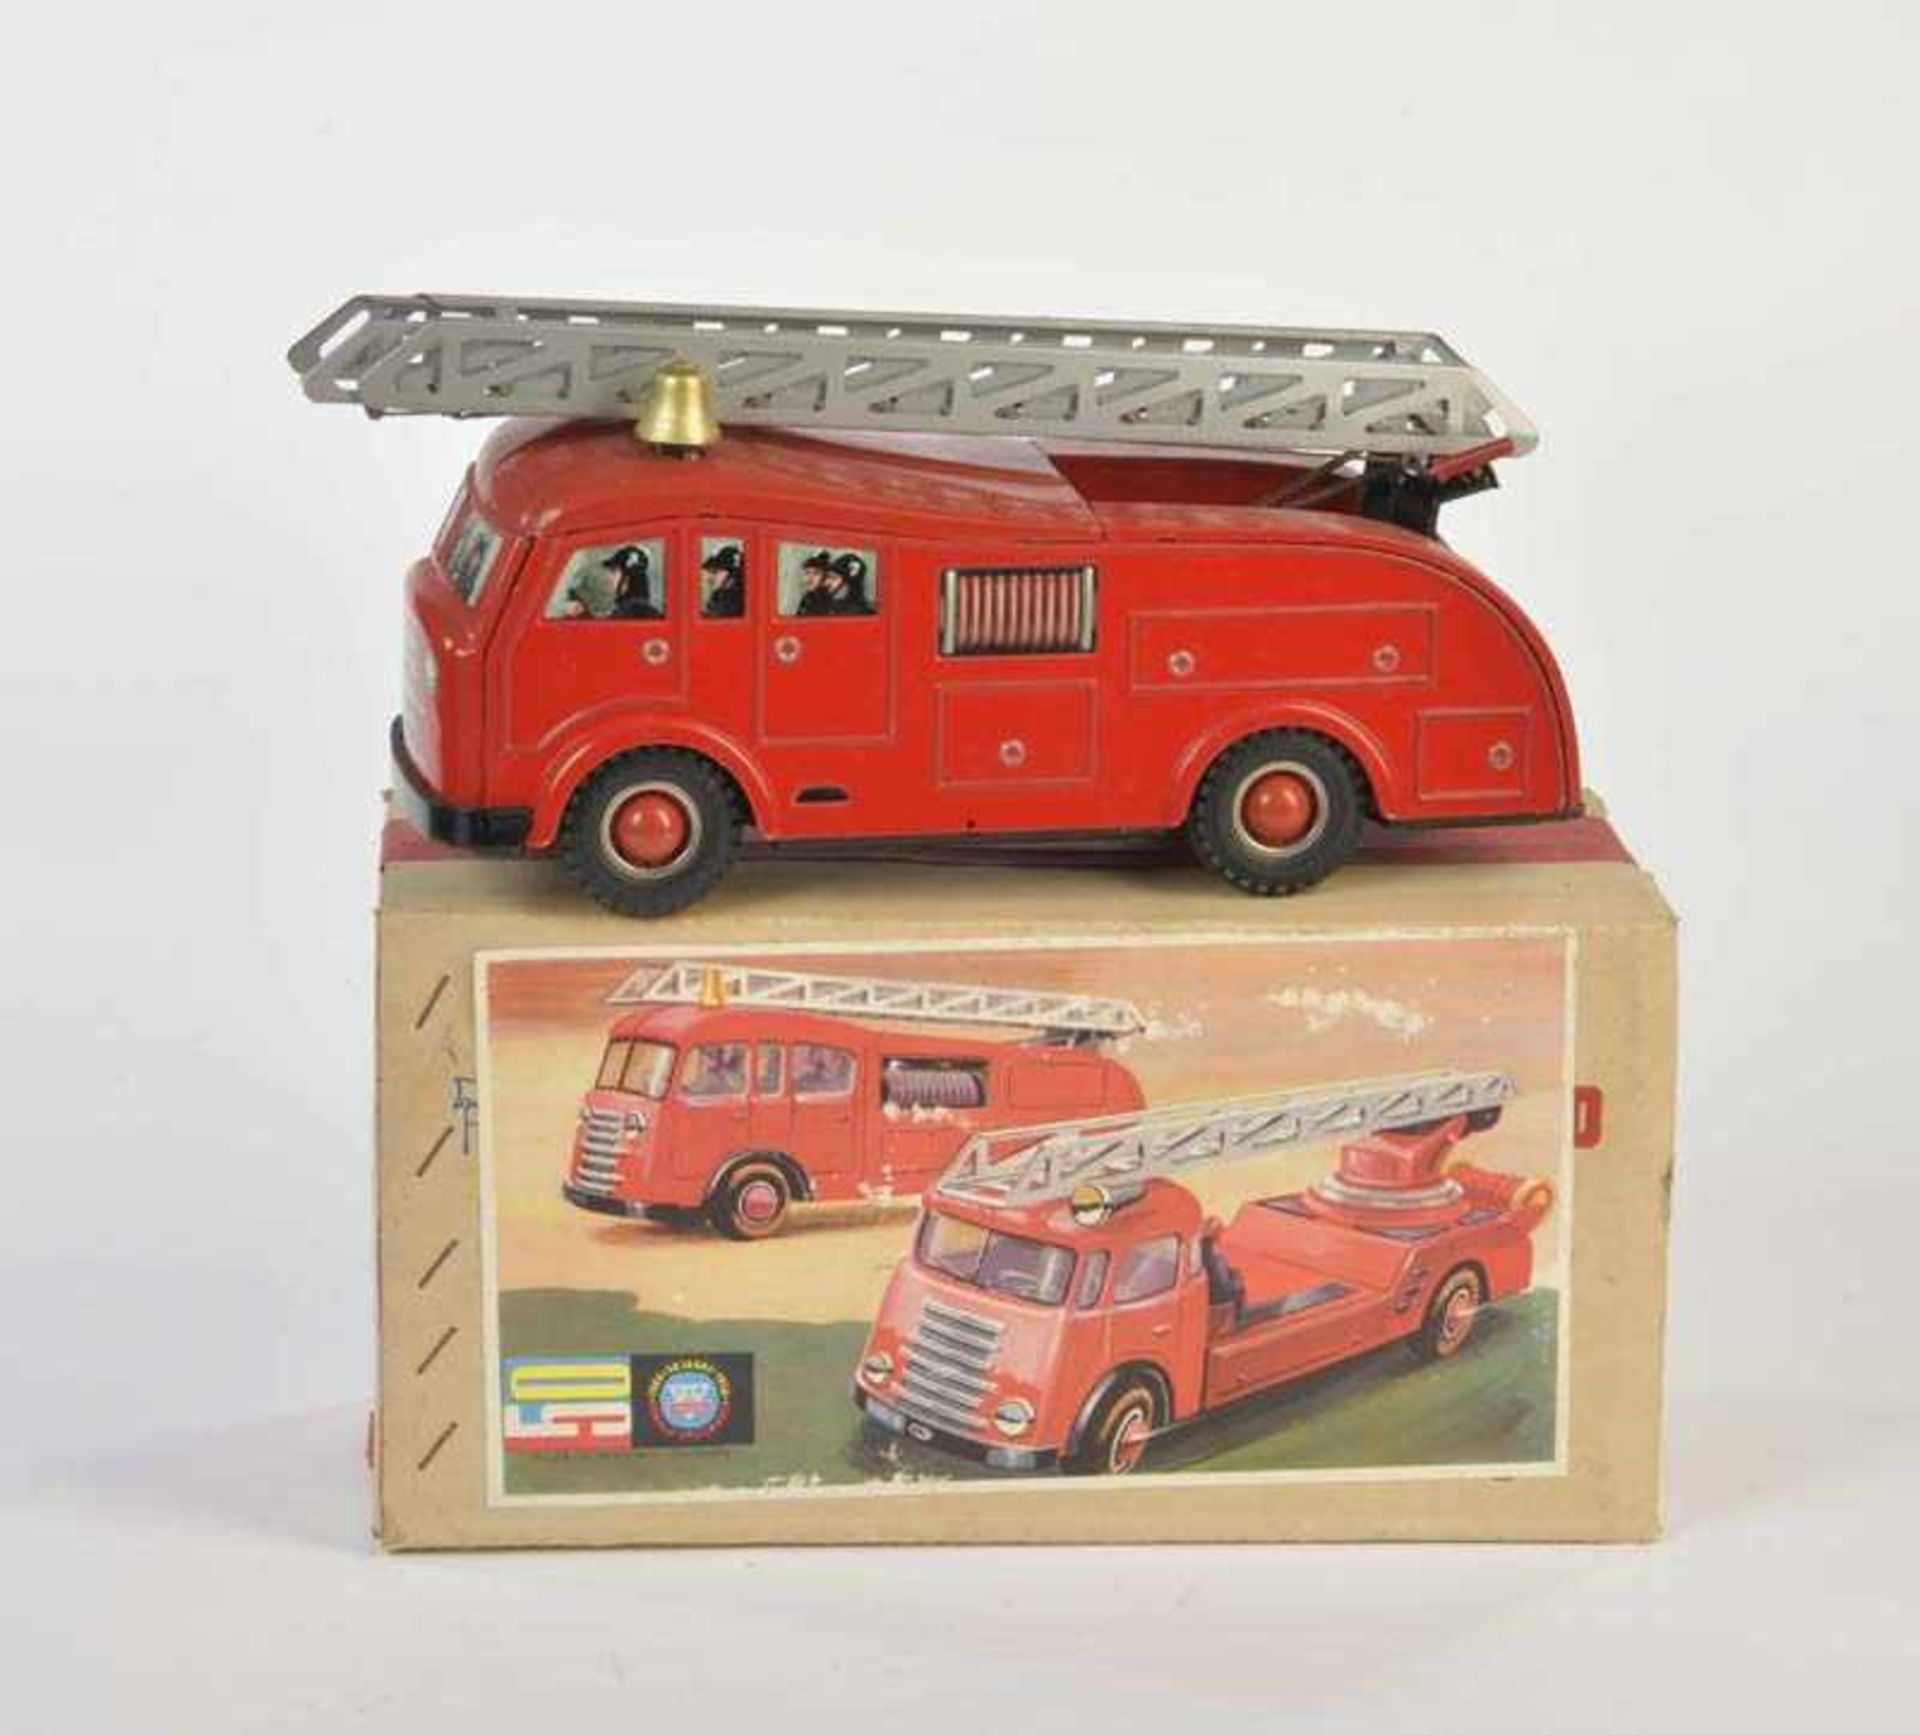 Arnold, Feuerwehr, W.-Germany, 27 cm, Blech, Funktion ok, Okt Z 2+, Z 1Arnold, Fire Engine, W.-